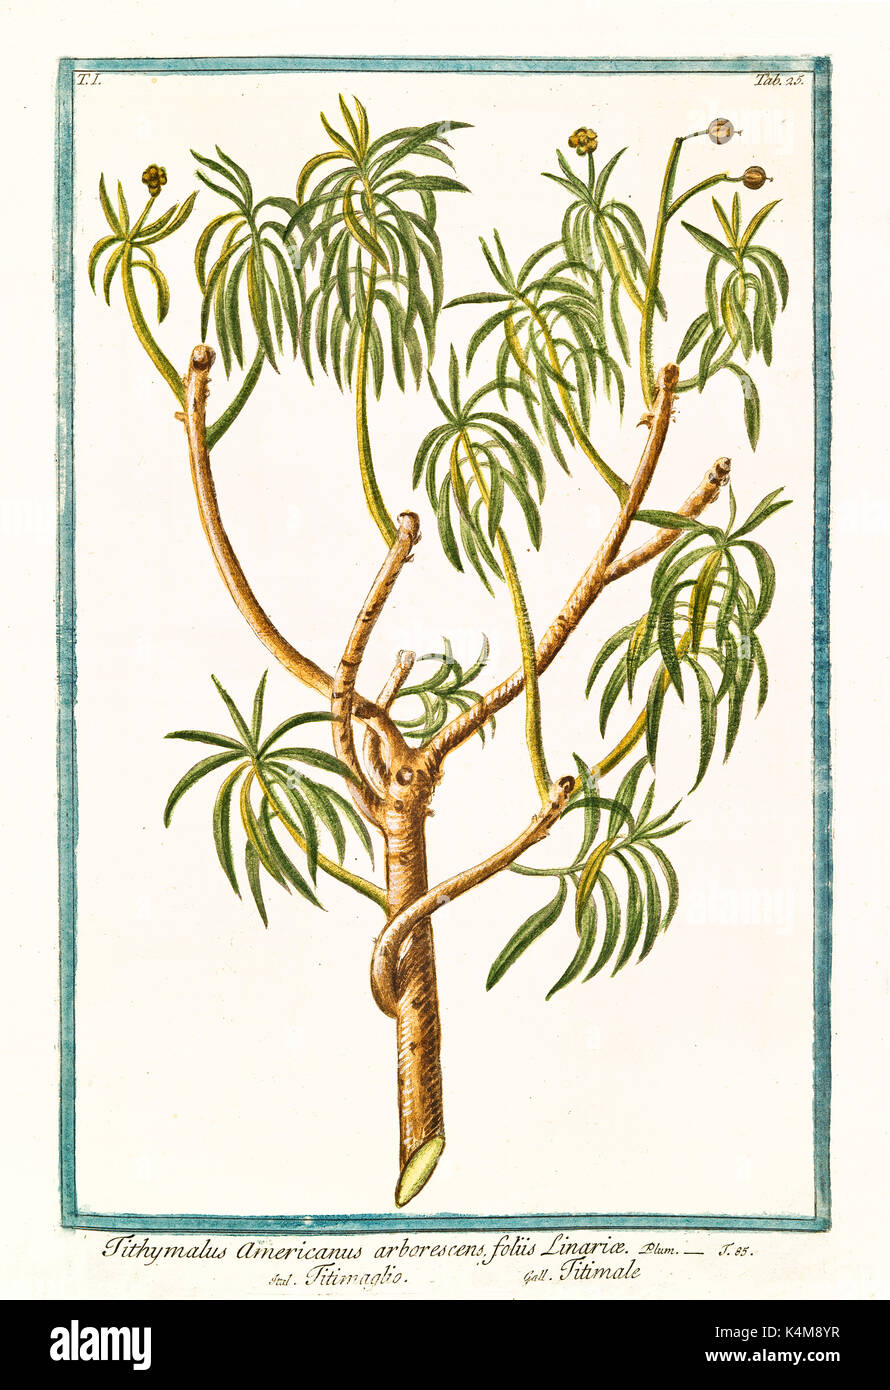 Old illustration of Tithymalus americanus arborescens. By G. Bonelli on Hortus Romanus, publ. N. Martelli, Rome, 1772 – 93 Stock Photo